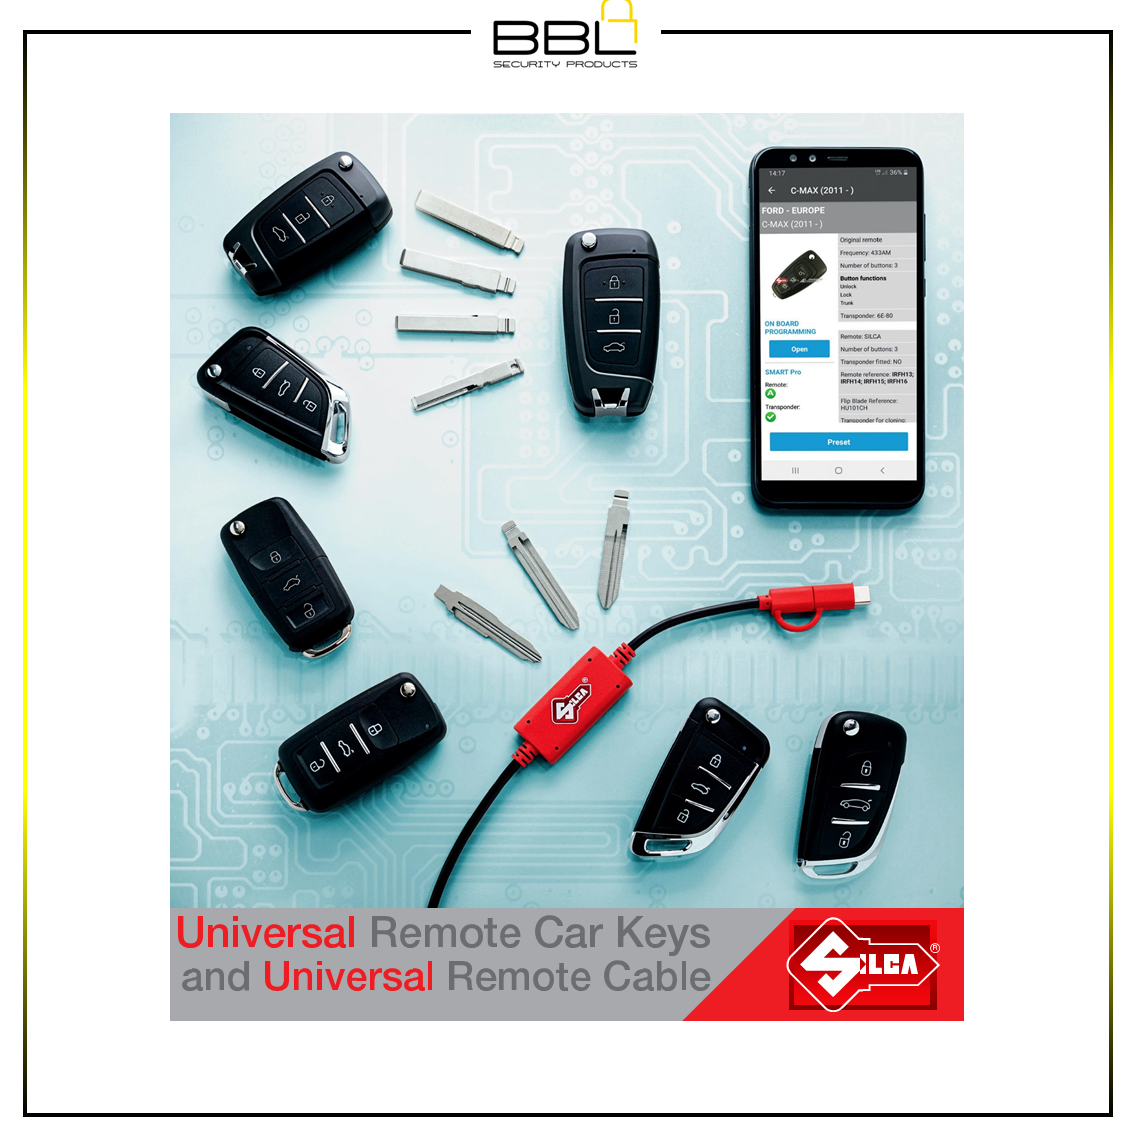 BBL - Universal Key and Remote Catalogue Catalogue